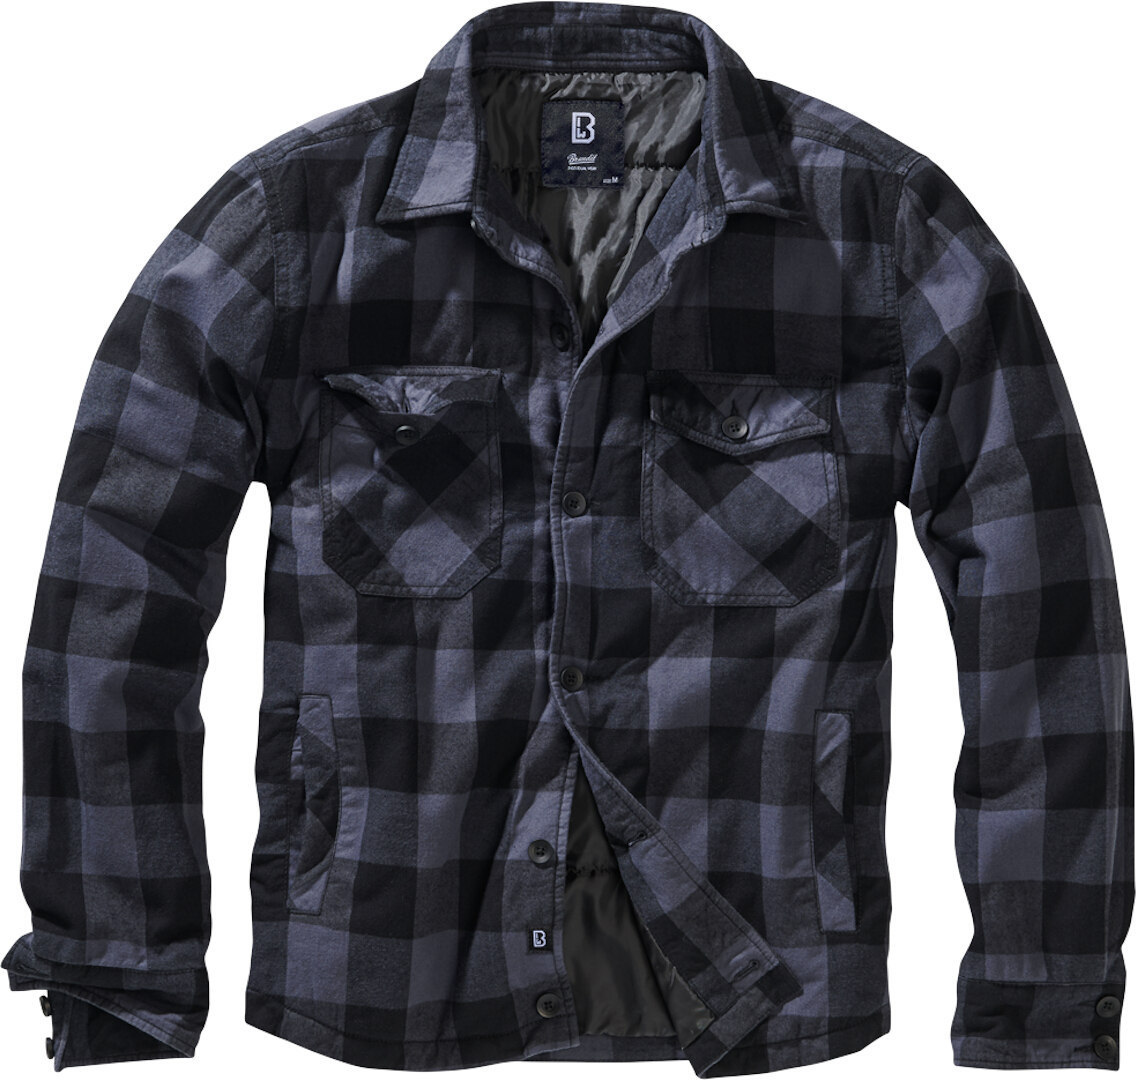 Brandit Lumber Jacke, schwarz-grau, Größe L